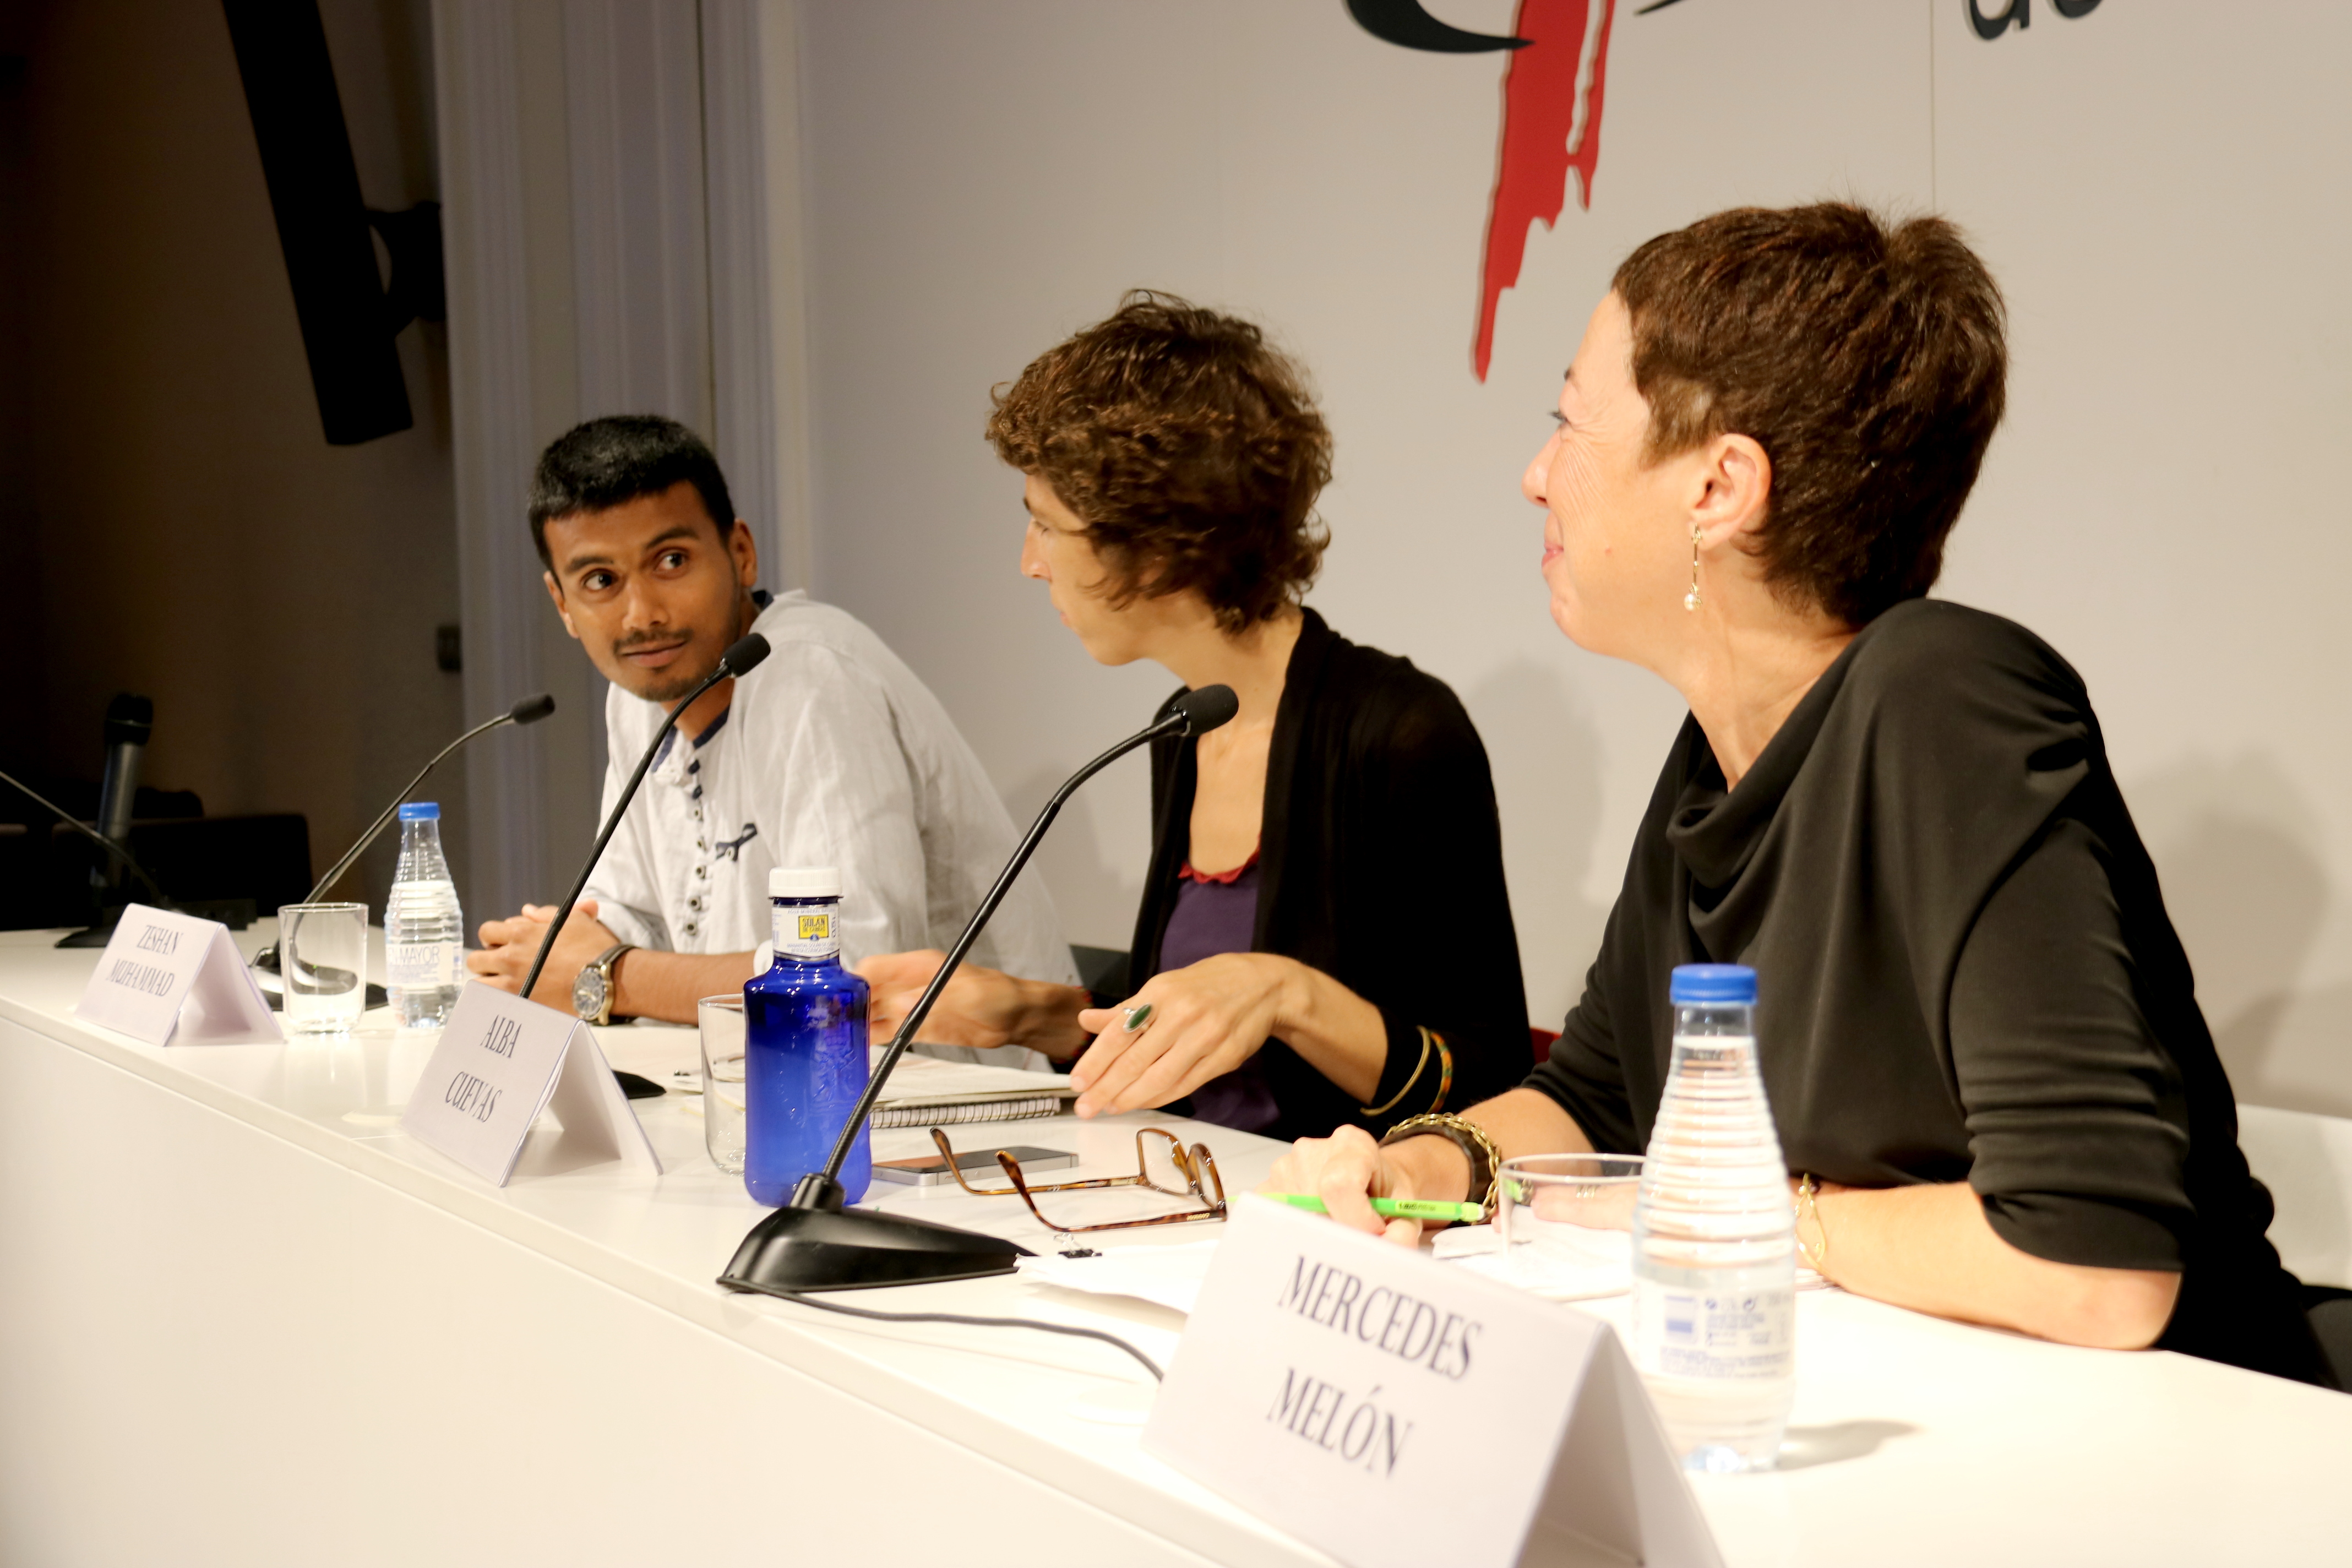 Zeshan Muhammad accompanied by activist Alba Cuevas and lawyer Mercedes Melón (by Alan Ruiz Terol)